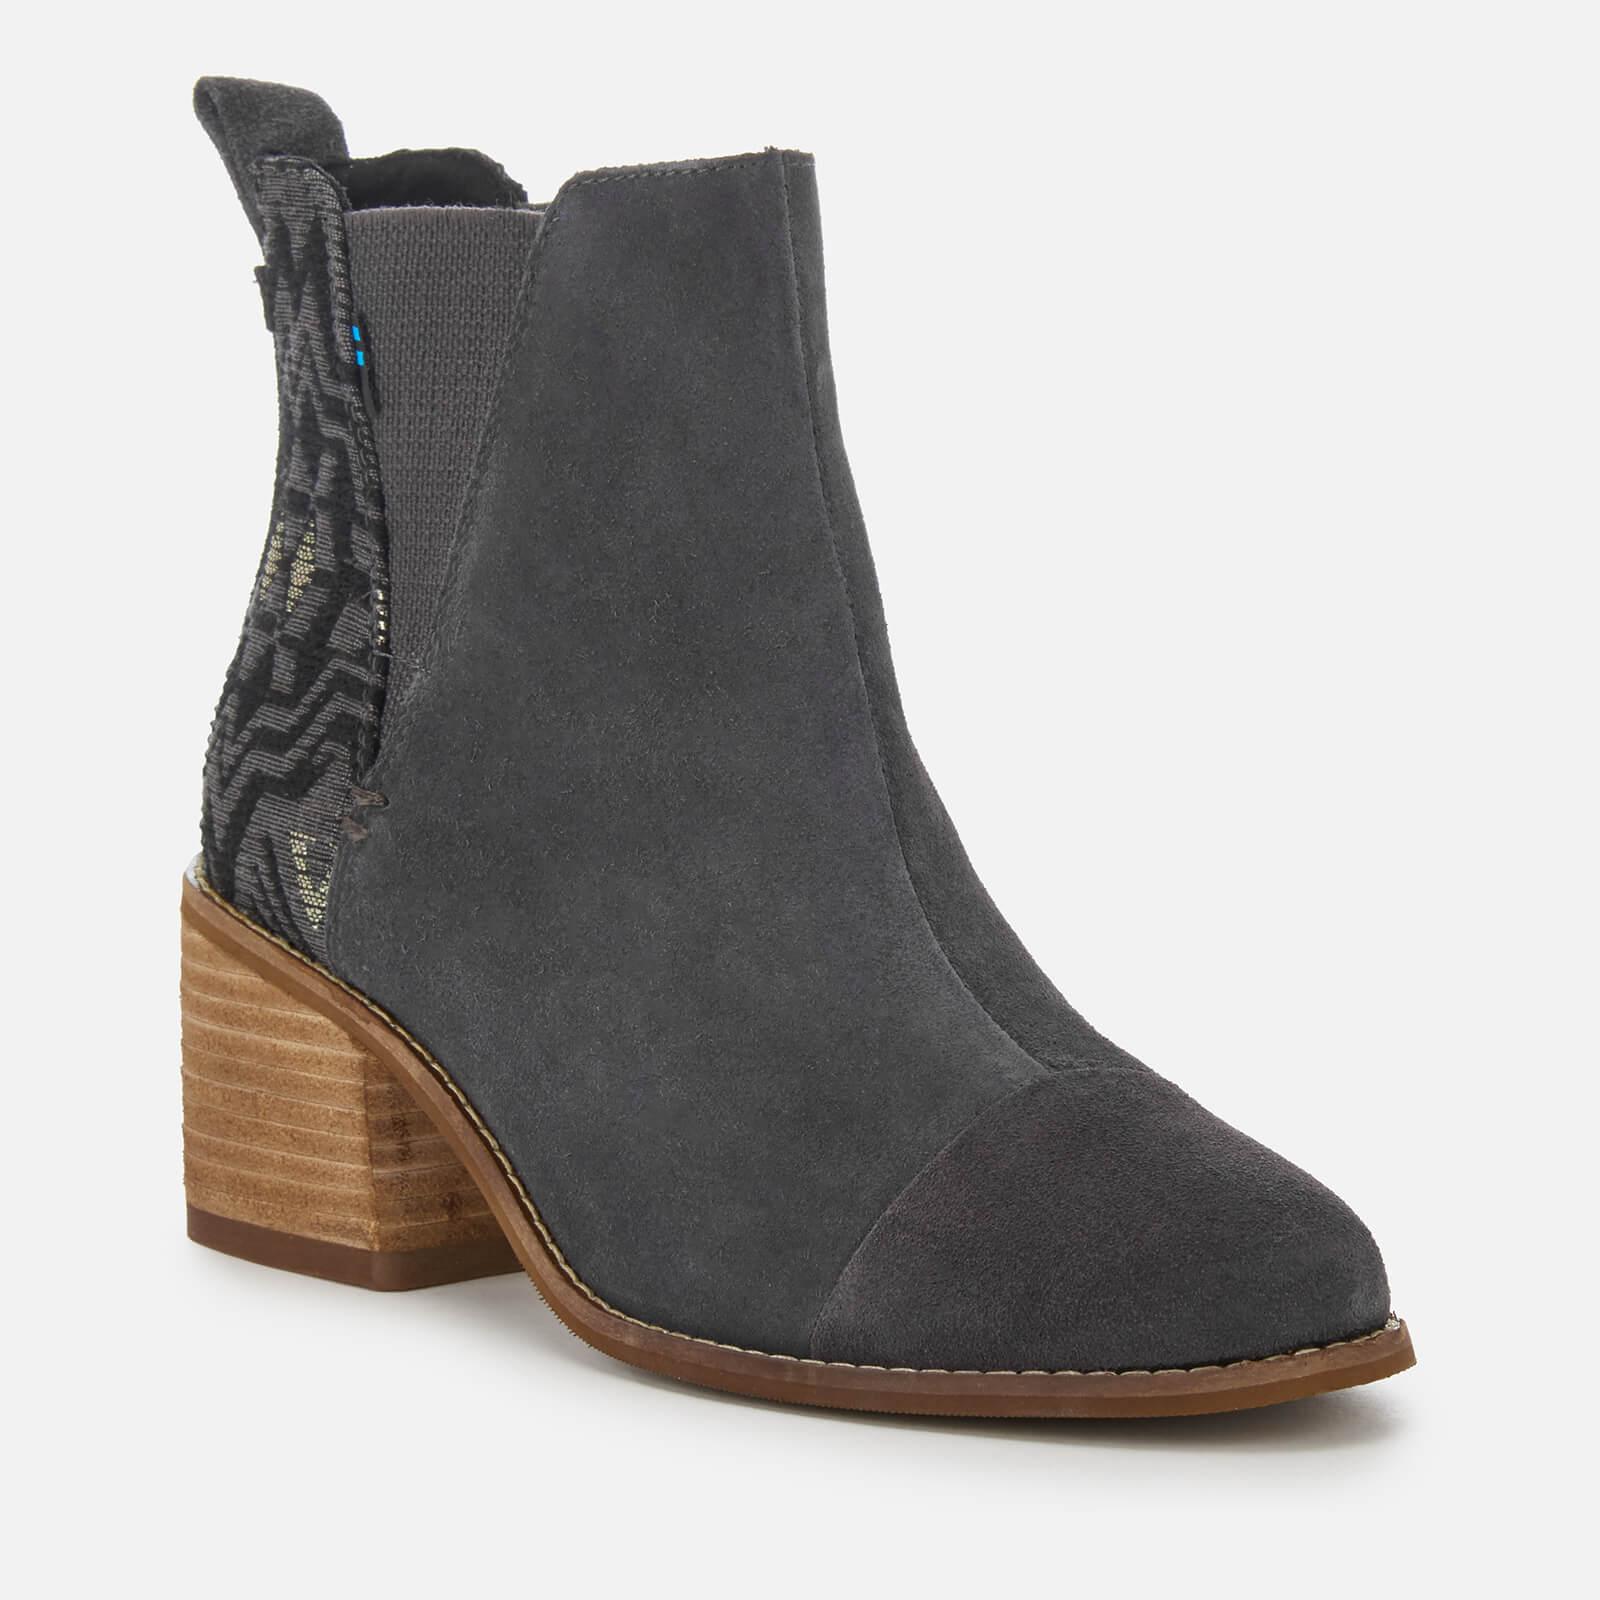 toms forged iron grey metallic jacquard women's esme boots